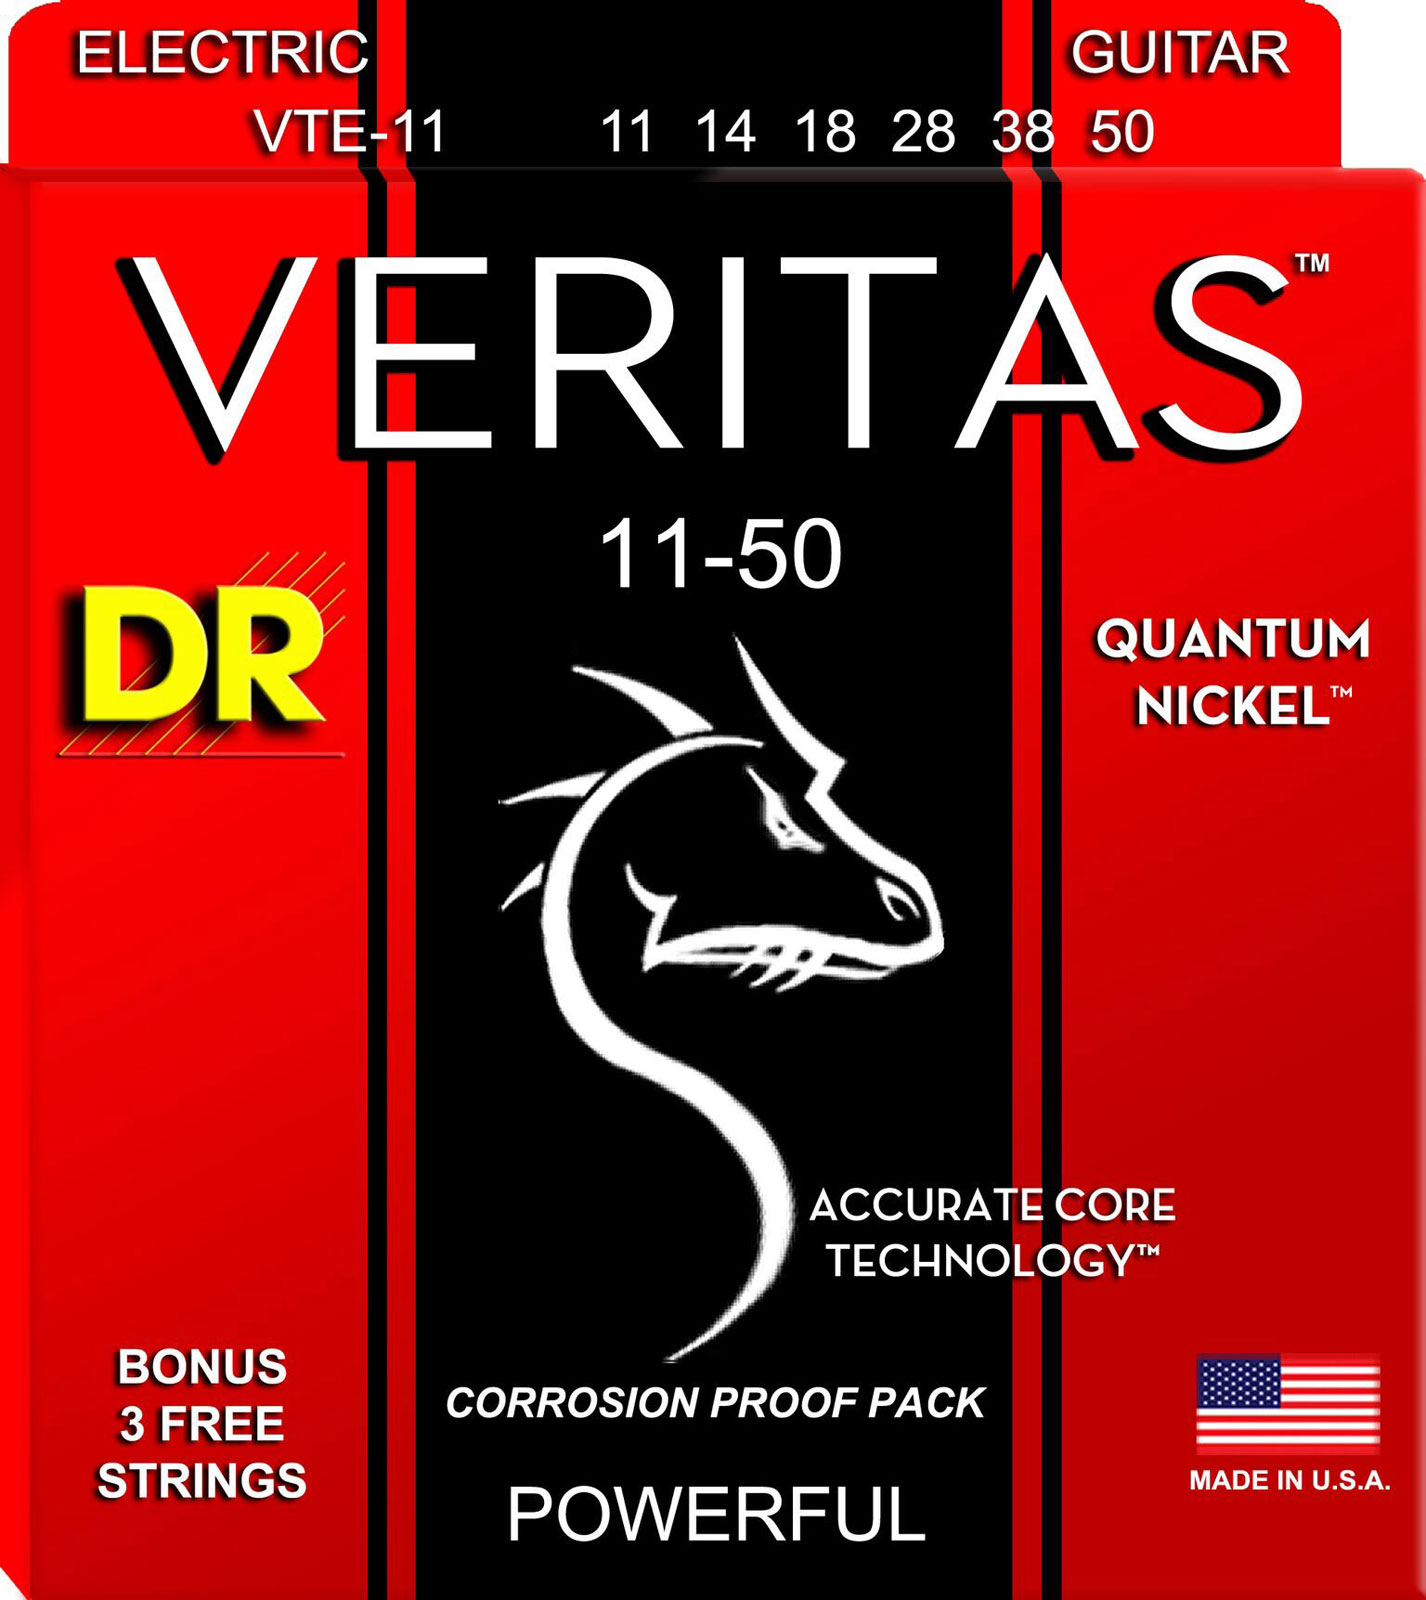 DR STRINGS VTE-11 VERITAS 11-50